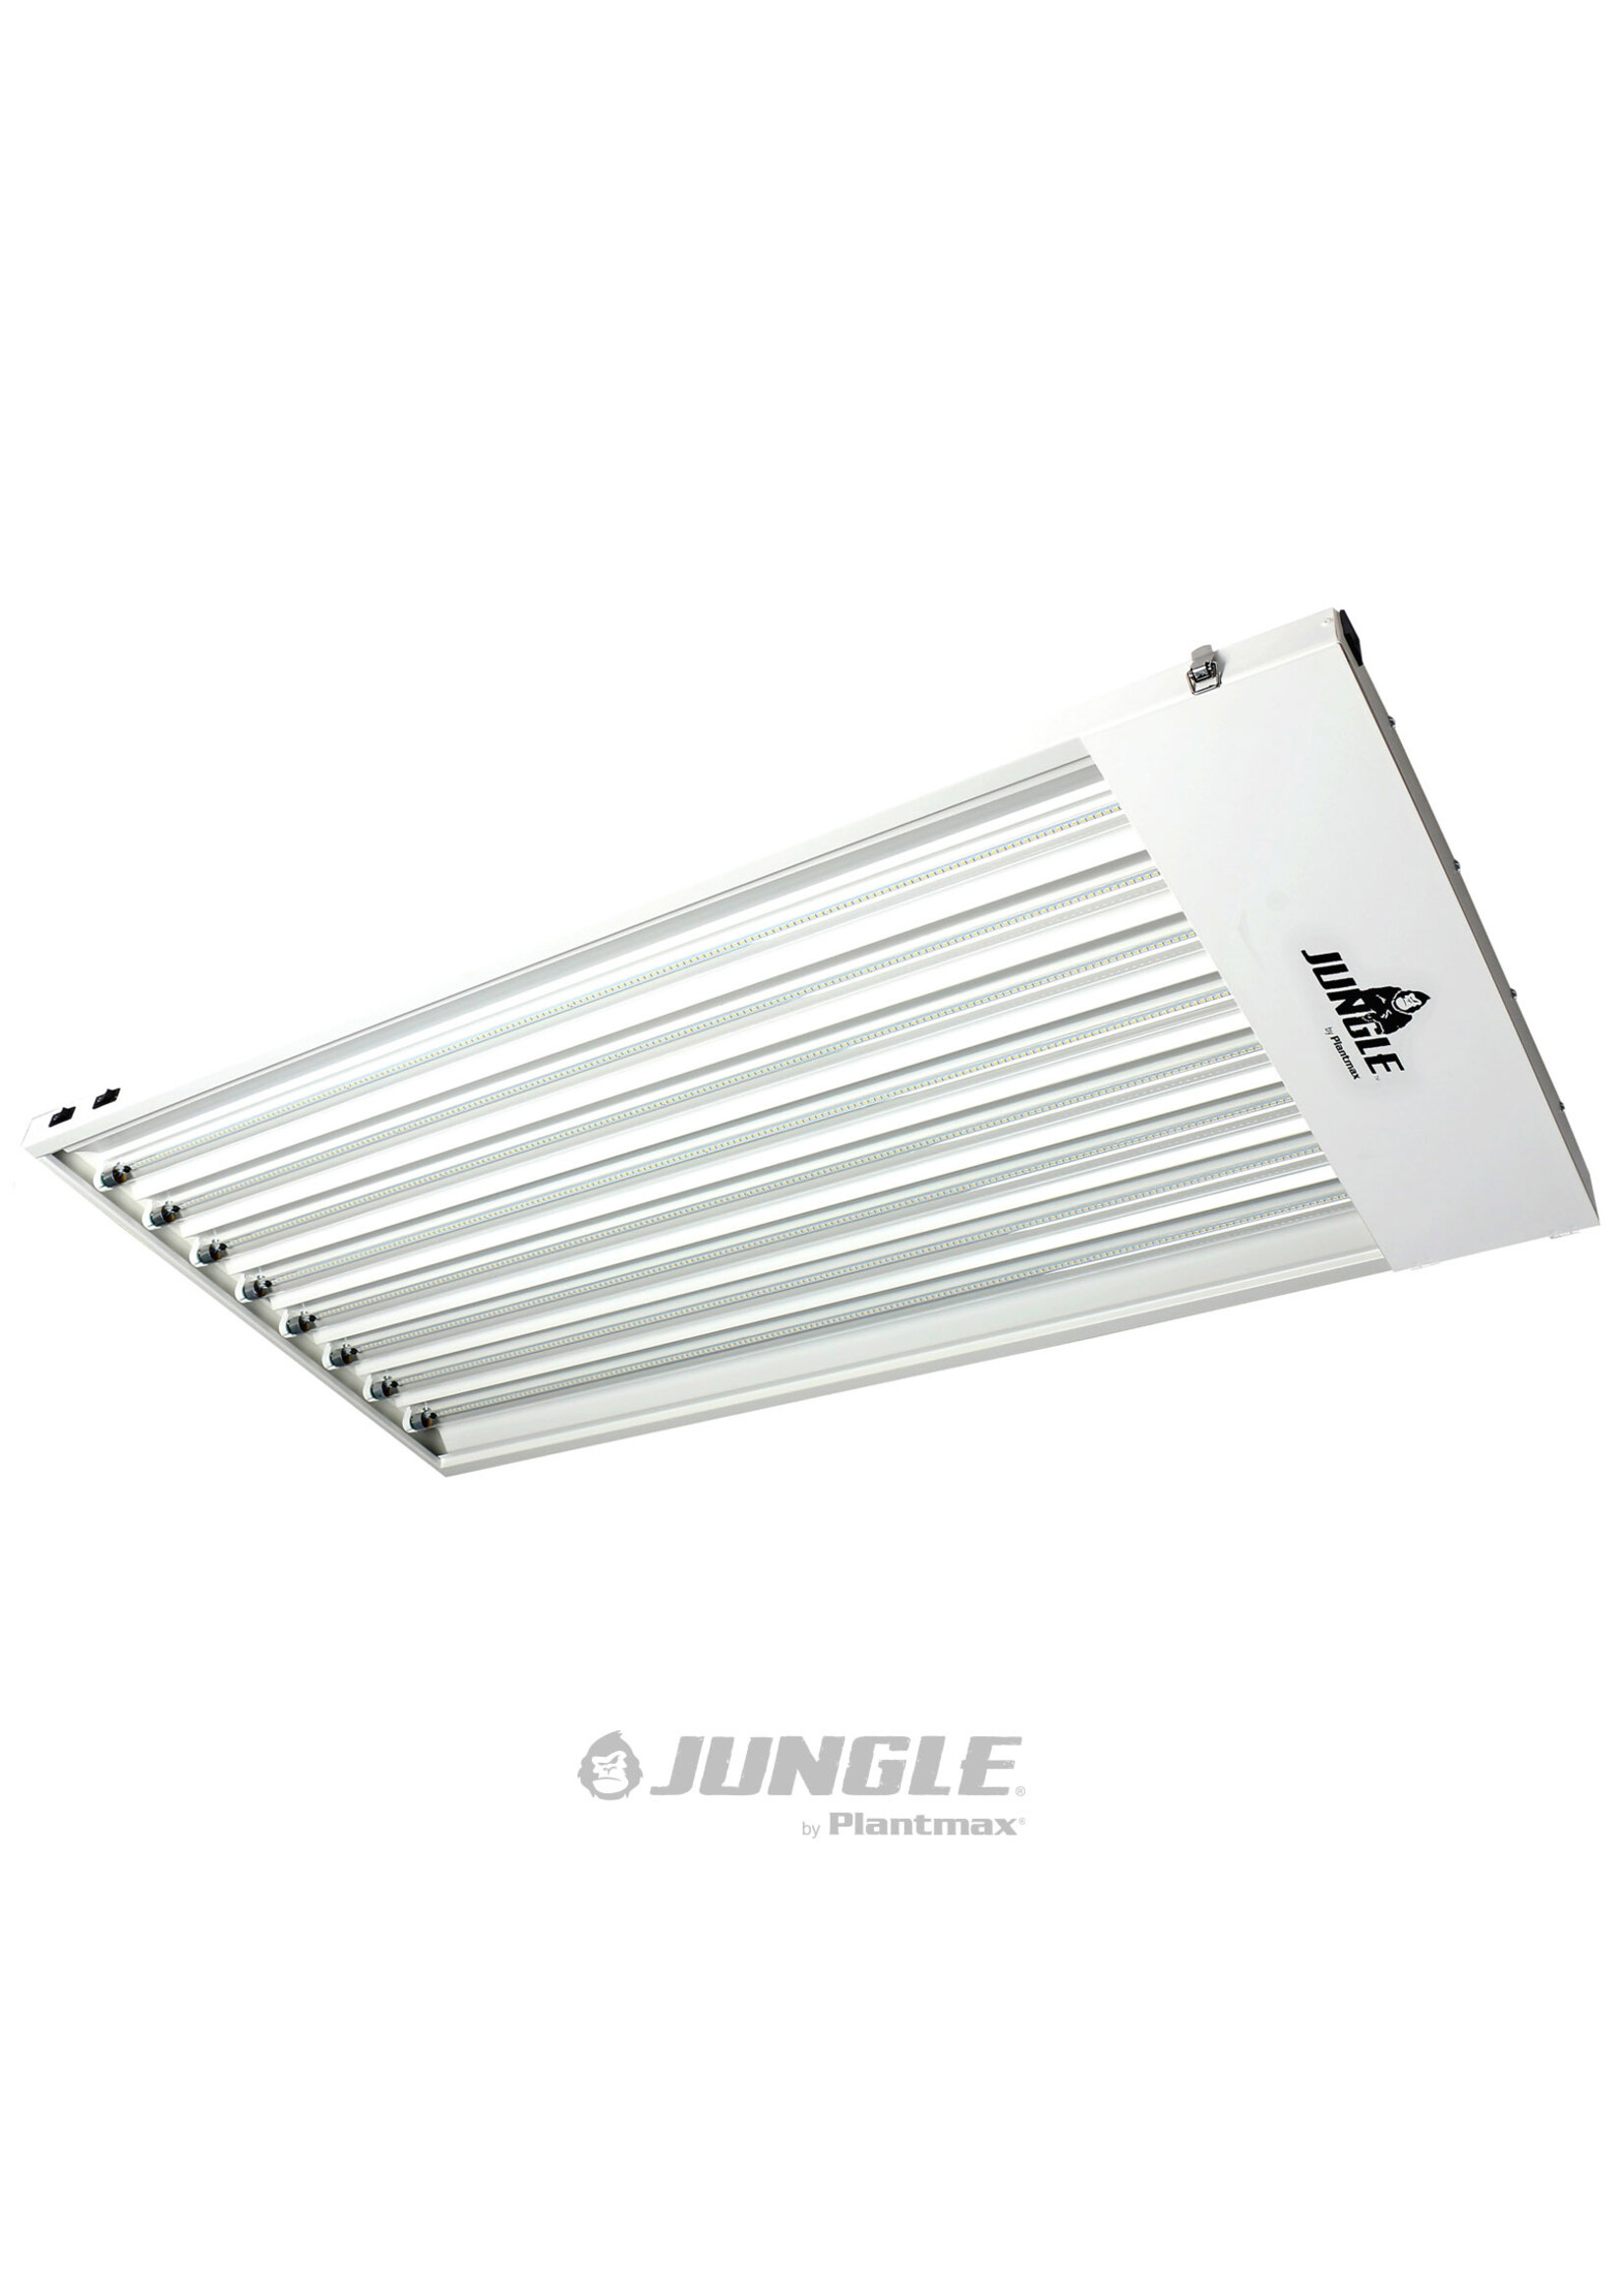 Jungle Control Jungle T5 LED Fixture 4x8 120-277V, 8' 120V 18AWG PC